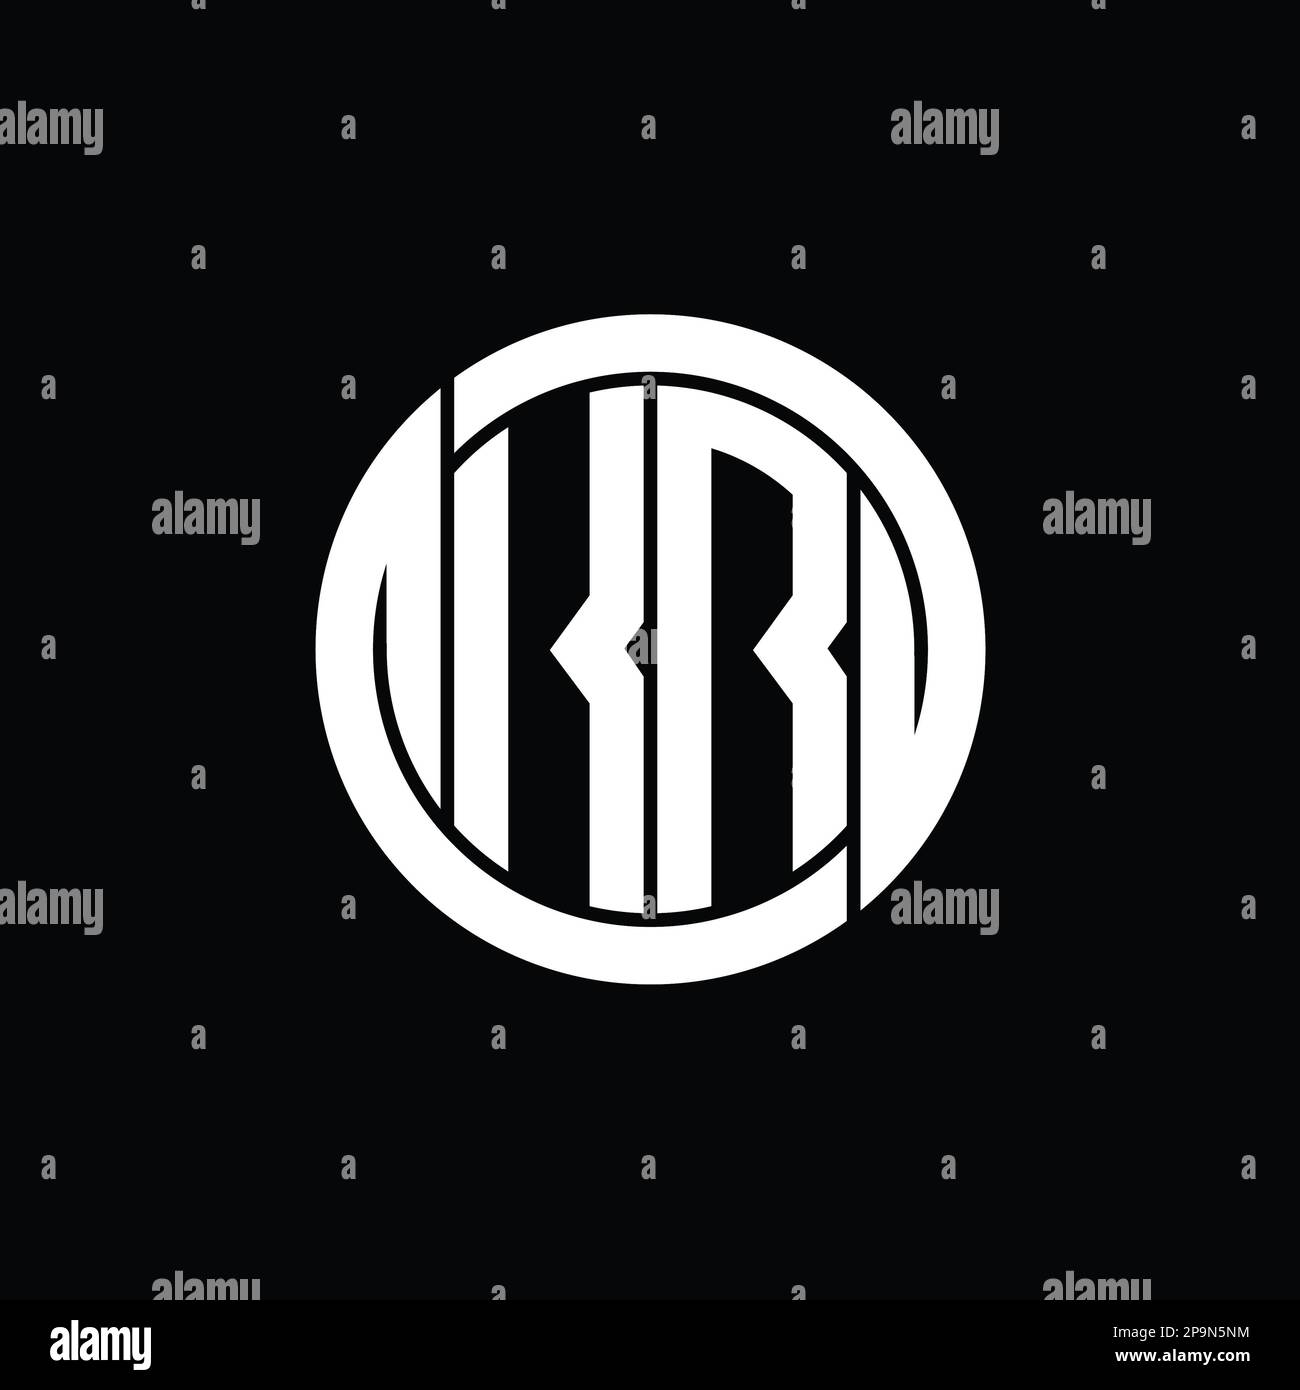 KR Logo monogram shield inside circle isolated shape vector images design template Stock Photo